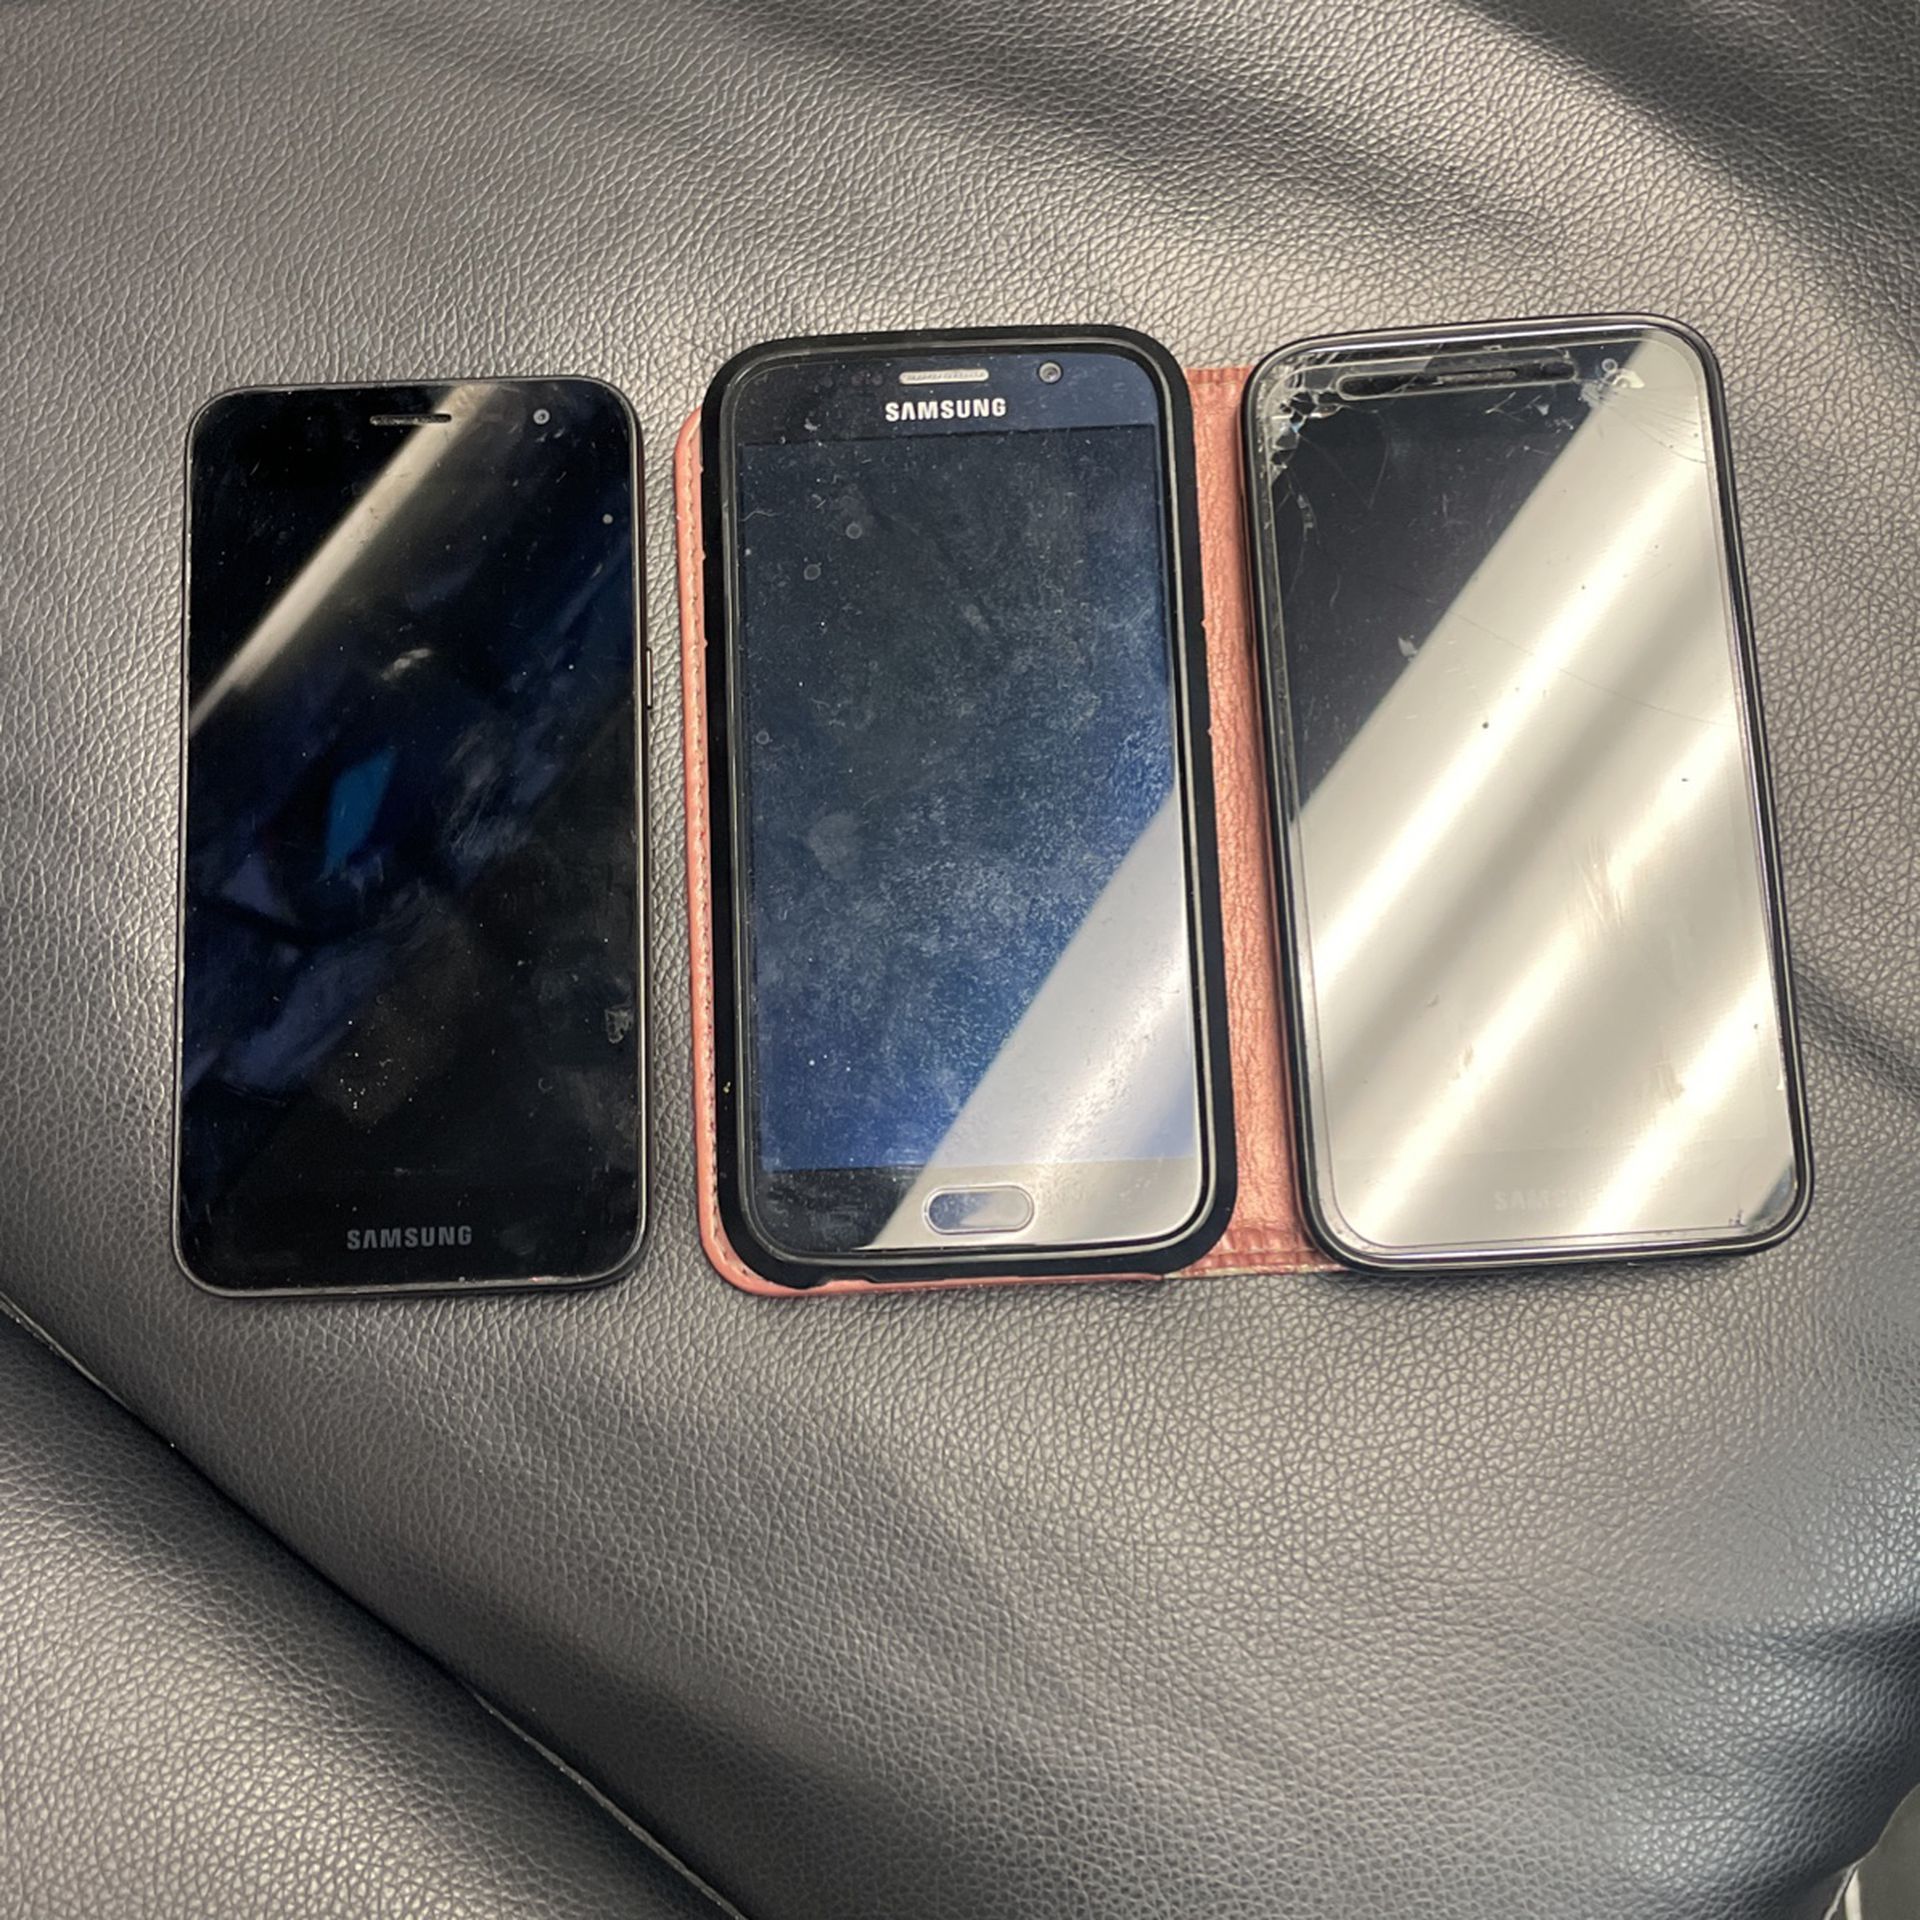 3 used Google Phones